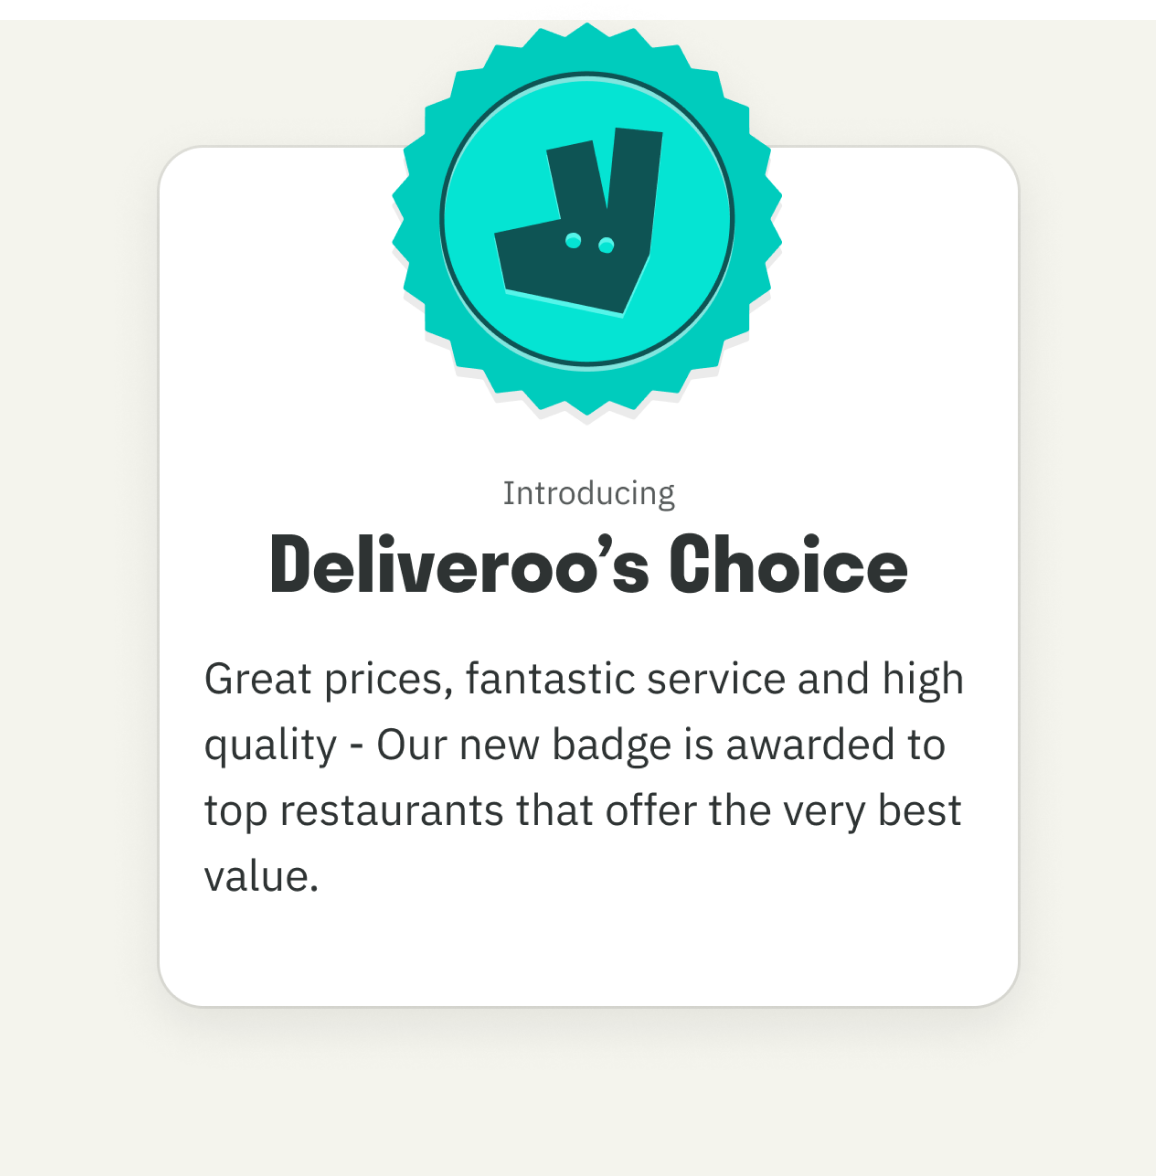 Deliveroo's Choice logo